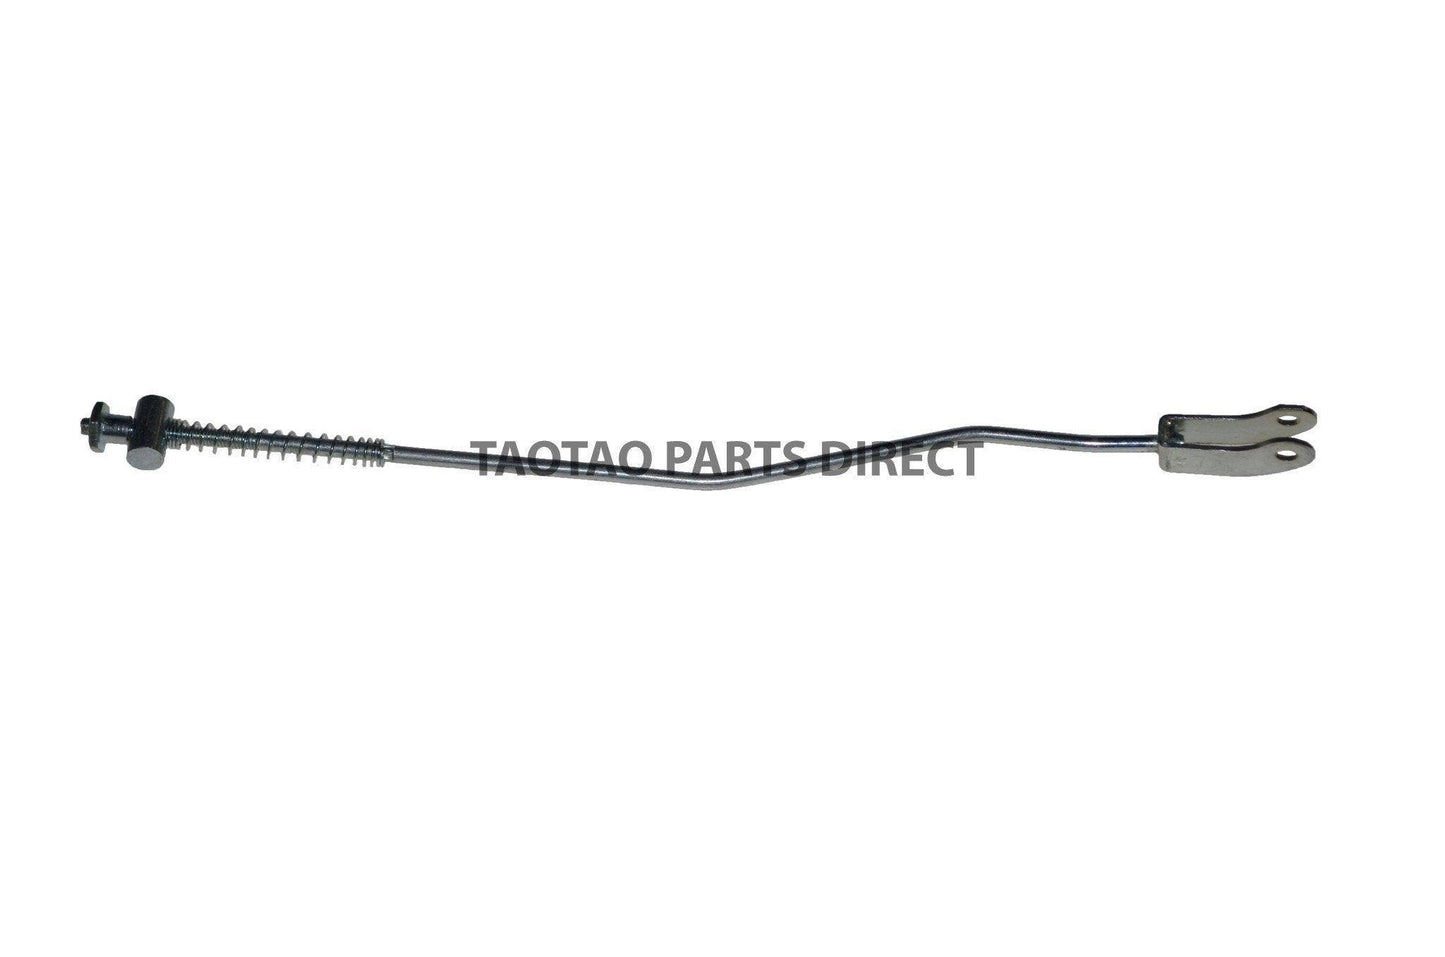 ATD90A Rear Brake Arm - TaoTao Parts Direct